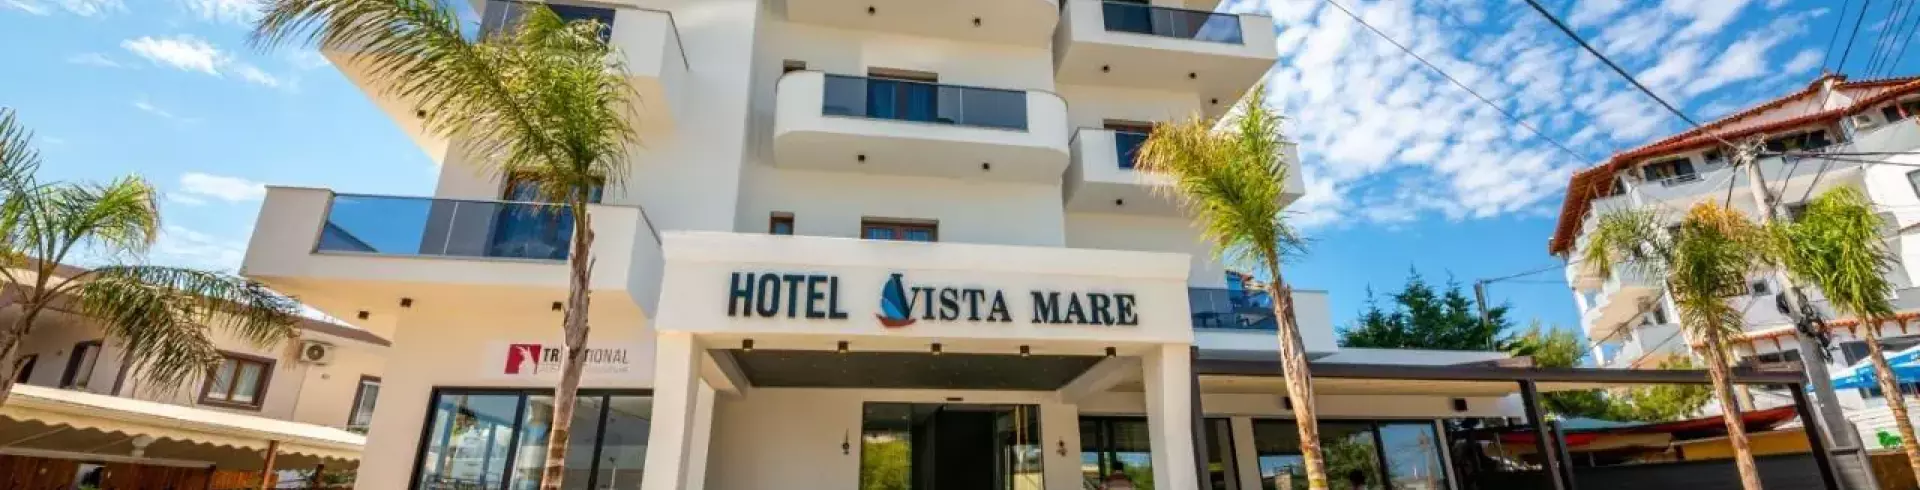 Hotel Vista Mare